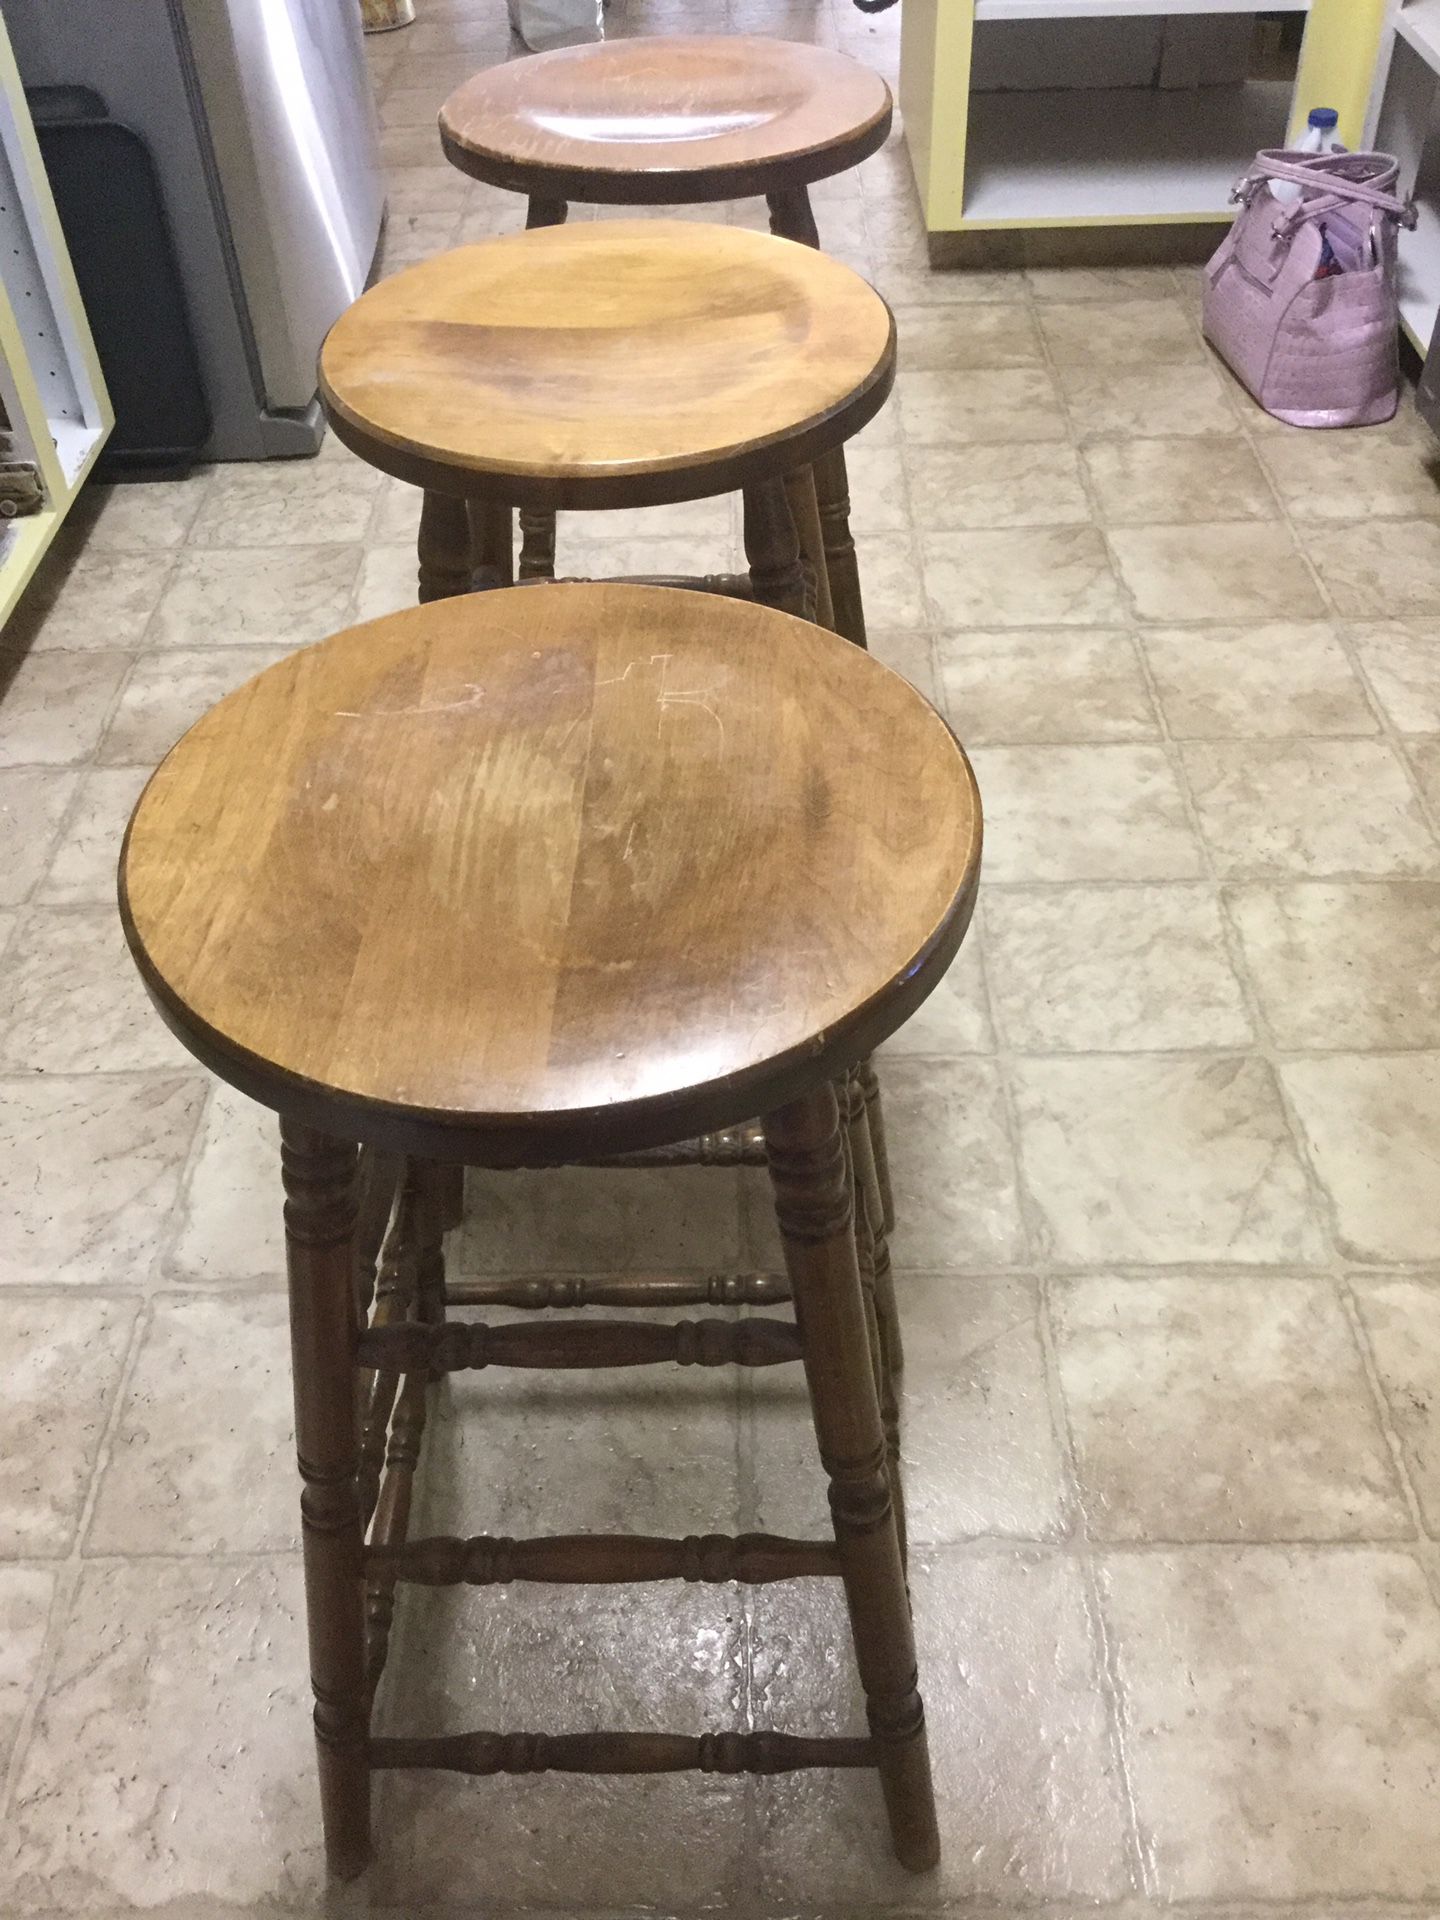 3 Nice stools